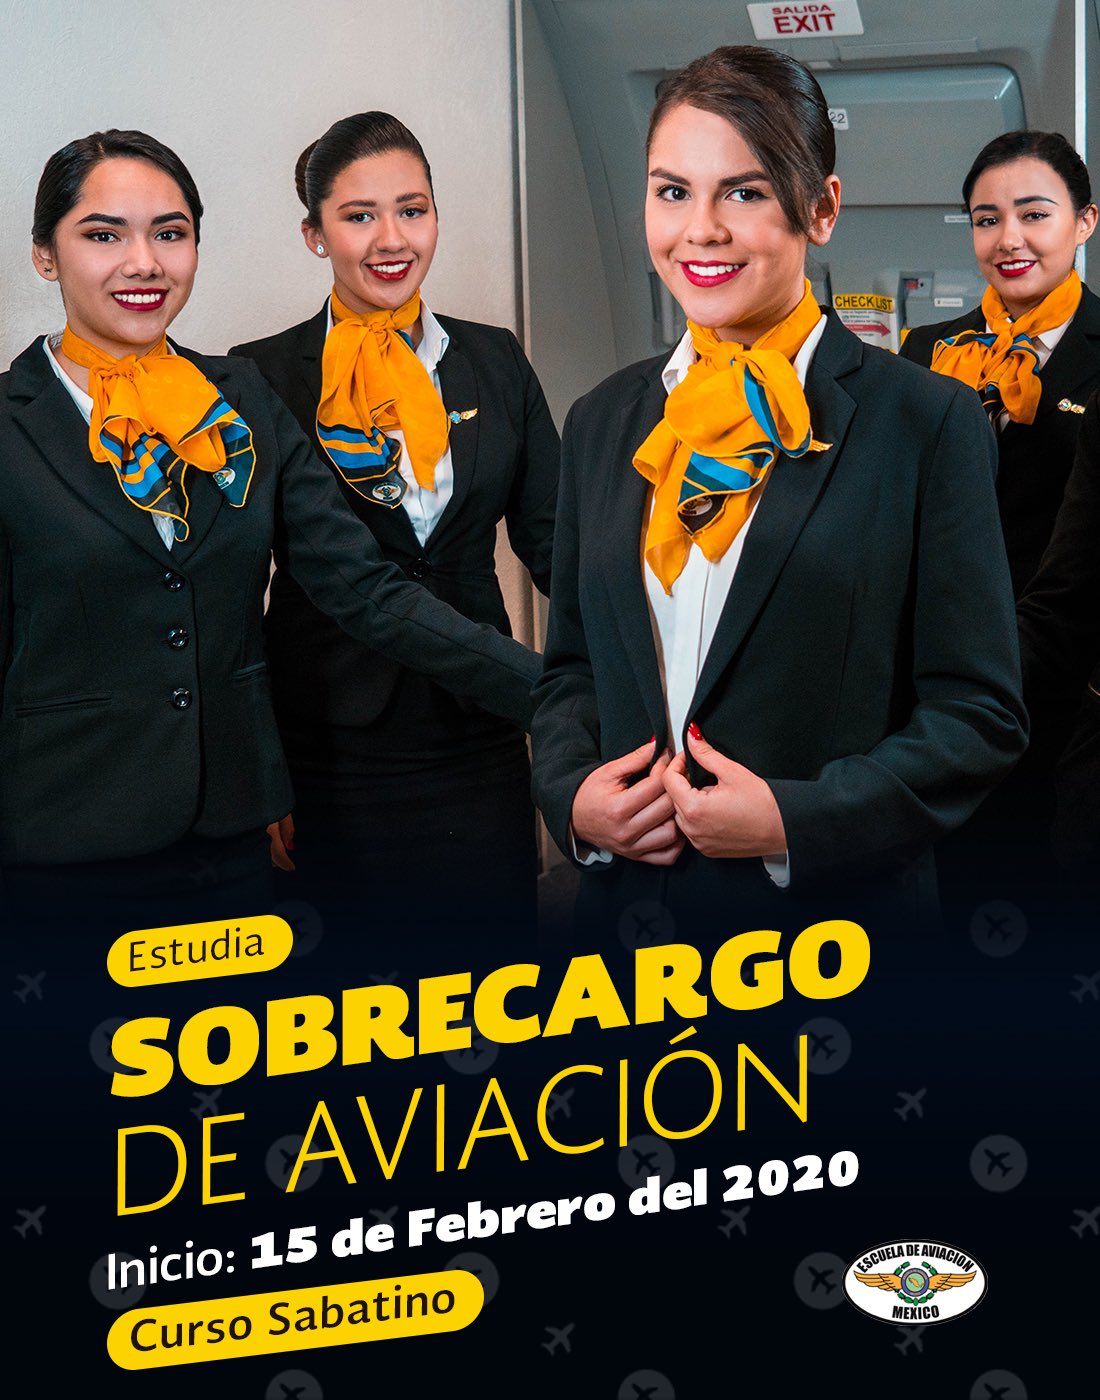 Escuela de Aviacion Mexico (@escuelamexico) / Twitter